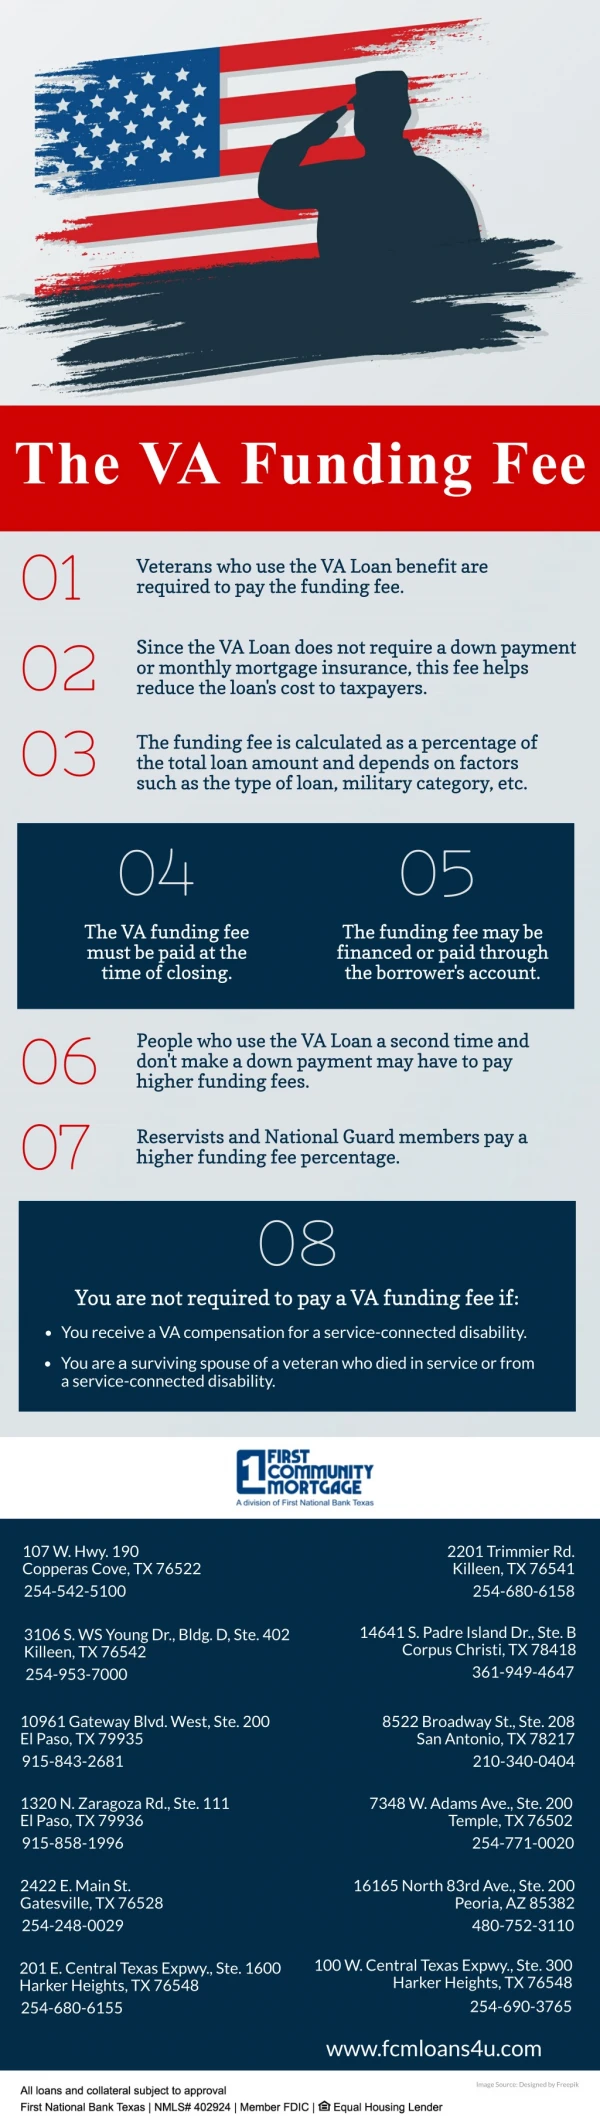 The VA Funding Fee